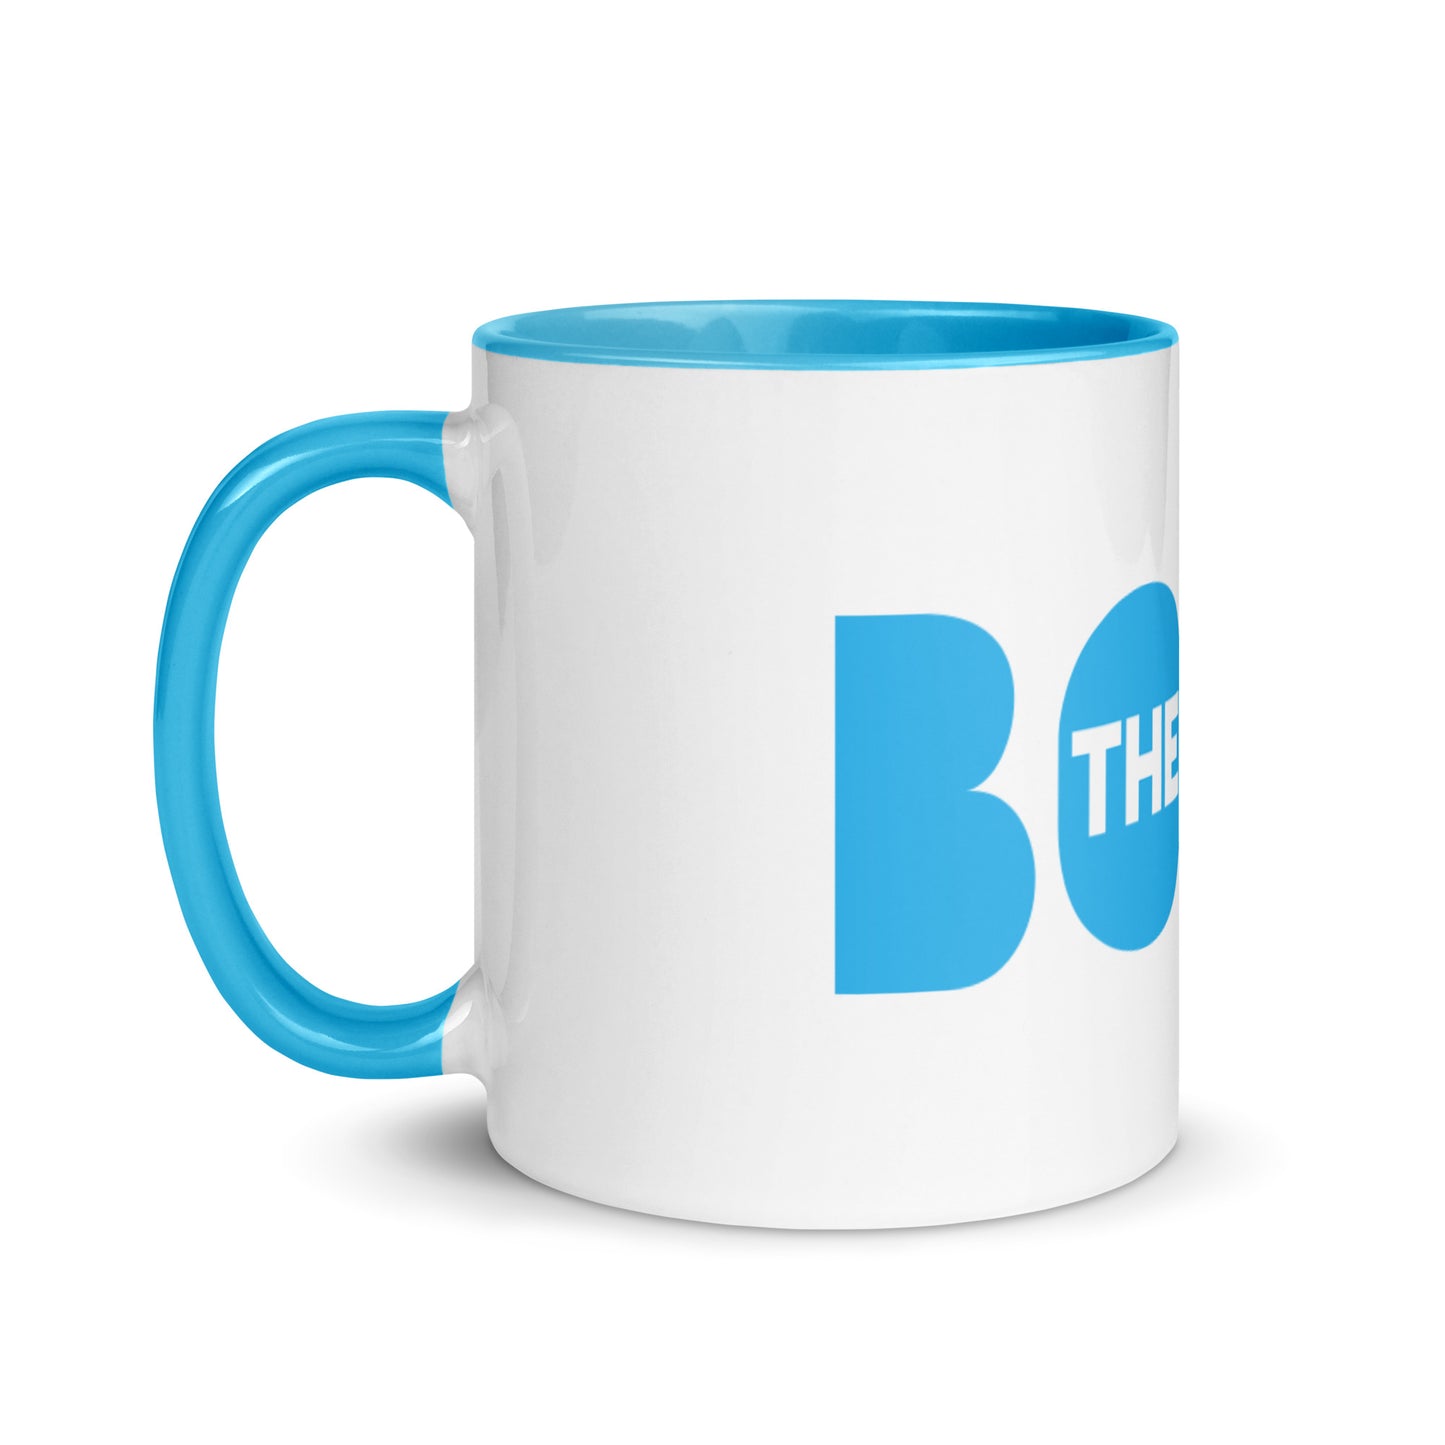 The Boss Mug | Blue and White